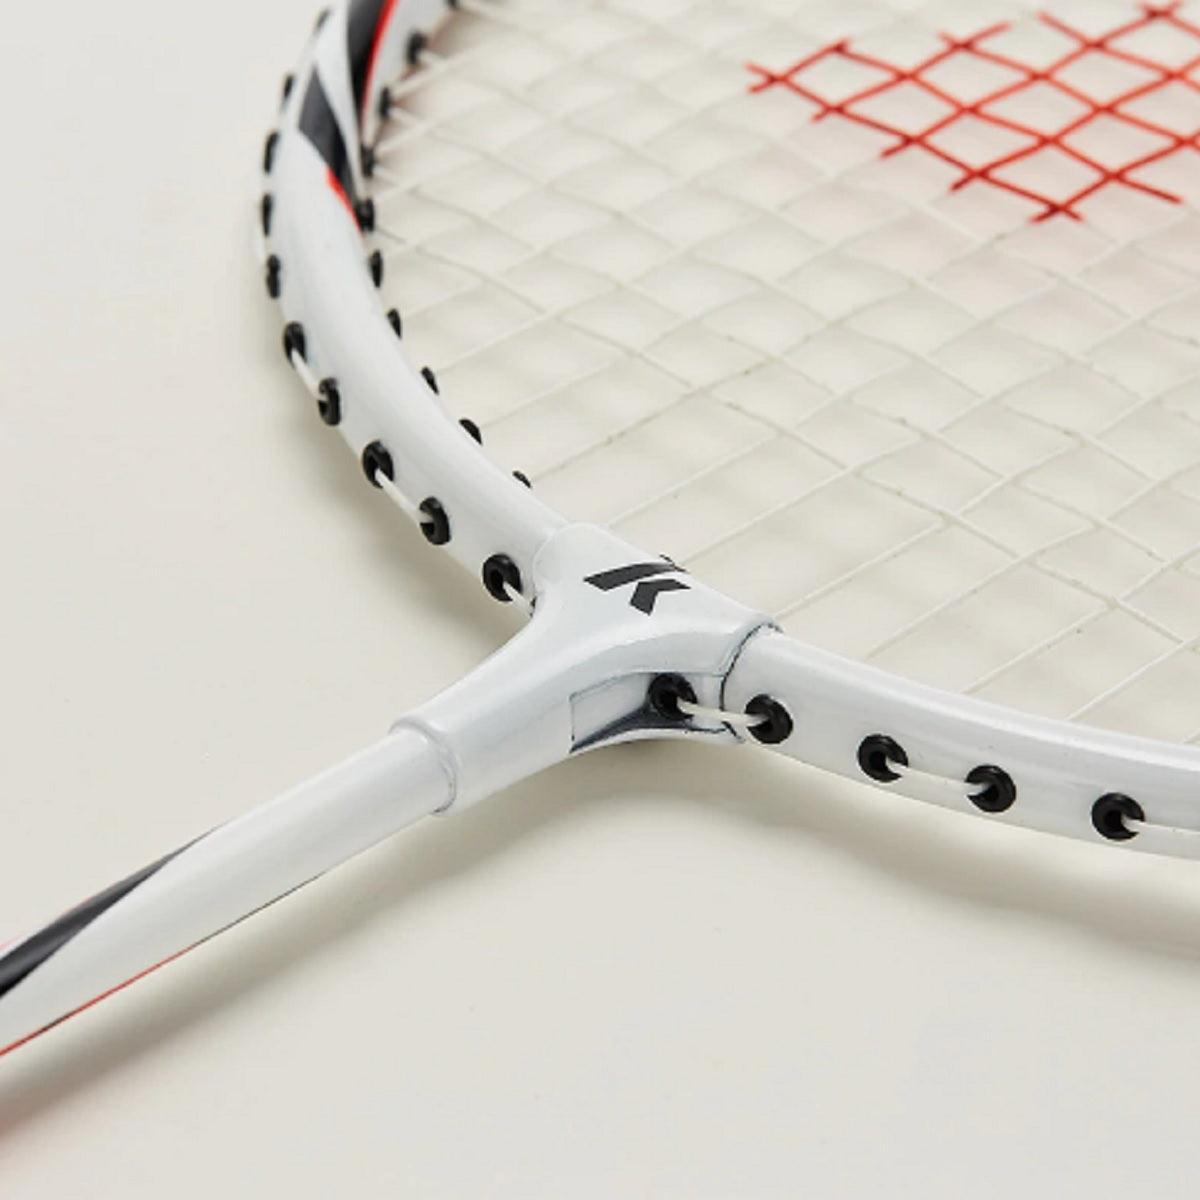 Kawasaki Pro UP-0160 Aluminium Alloy Badminton Racket - dealskart.com.au